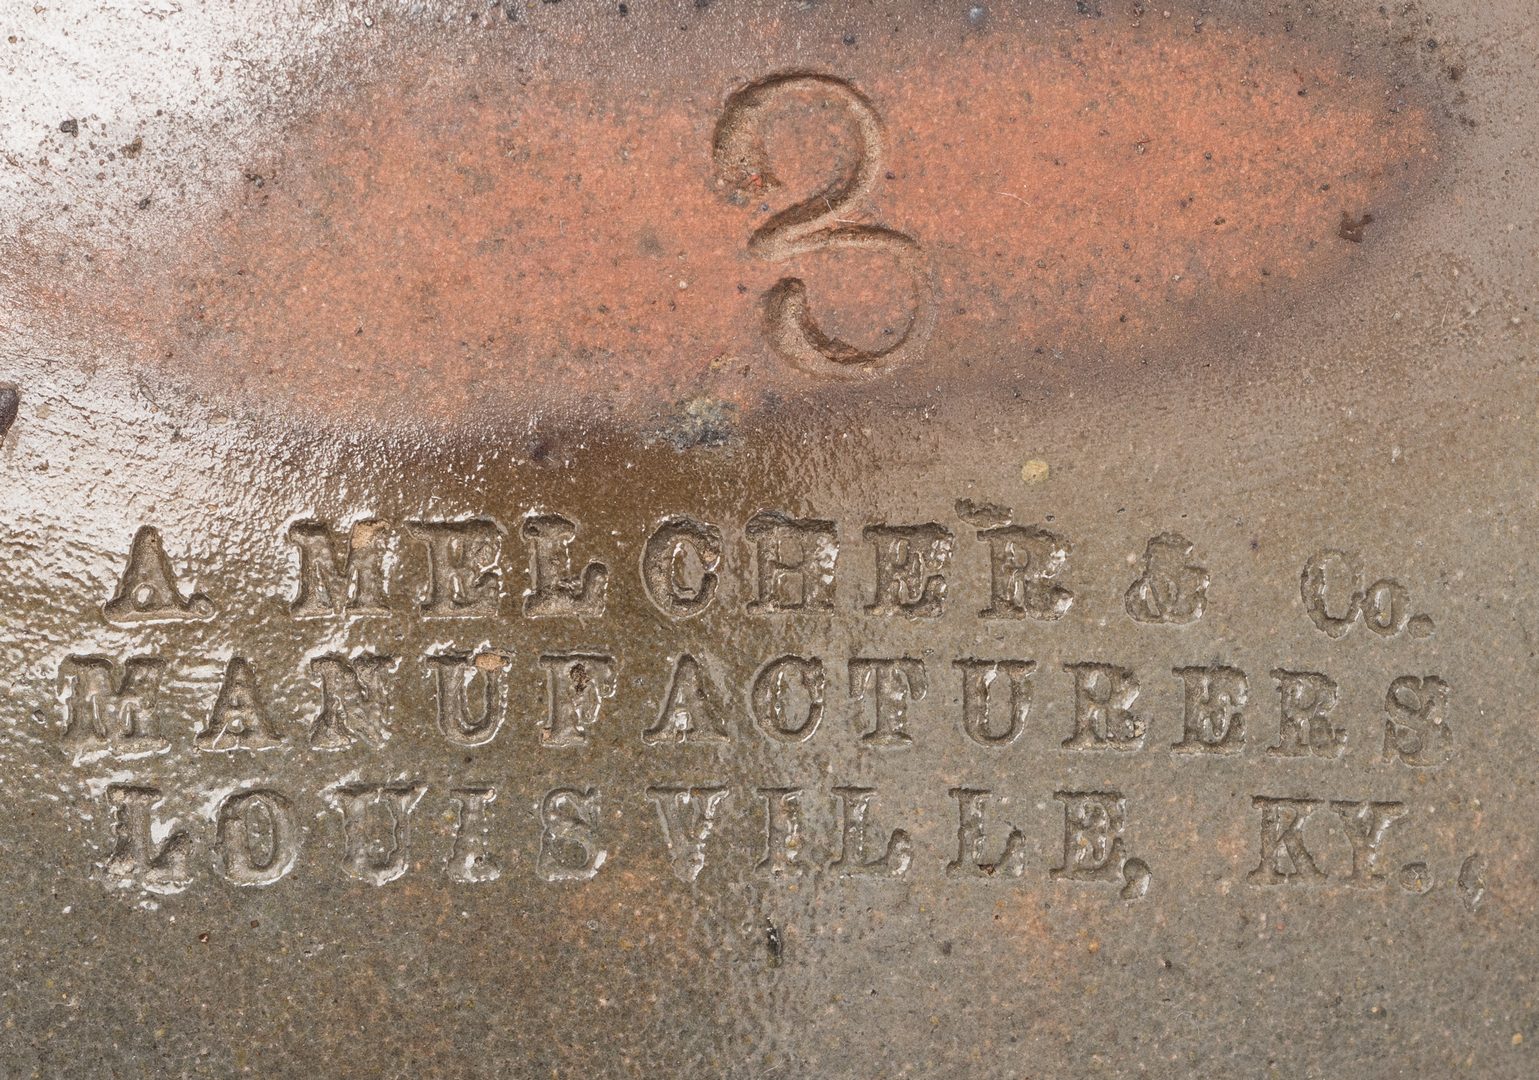 Lot 191: 2 Louisville, KY Stoneware Pottery Items, Melcher